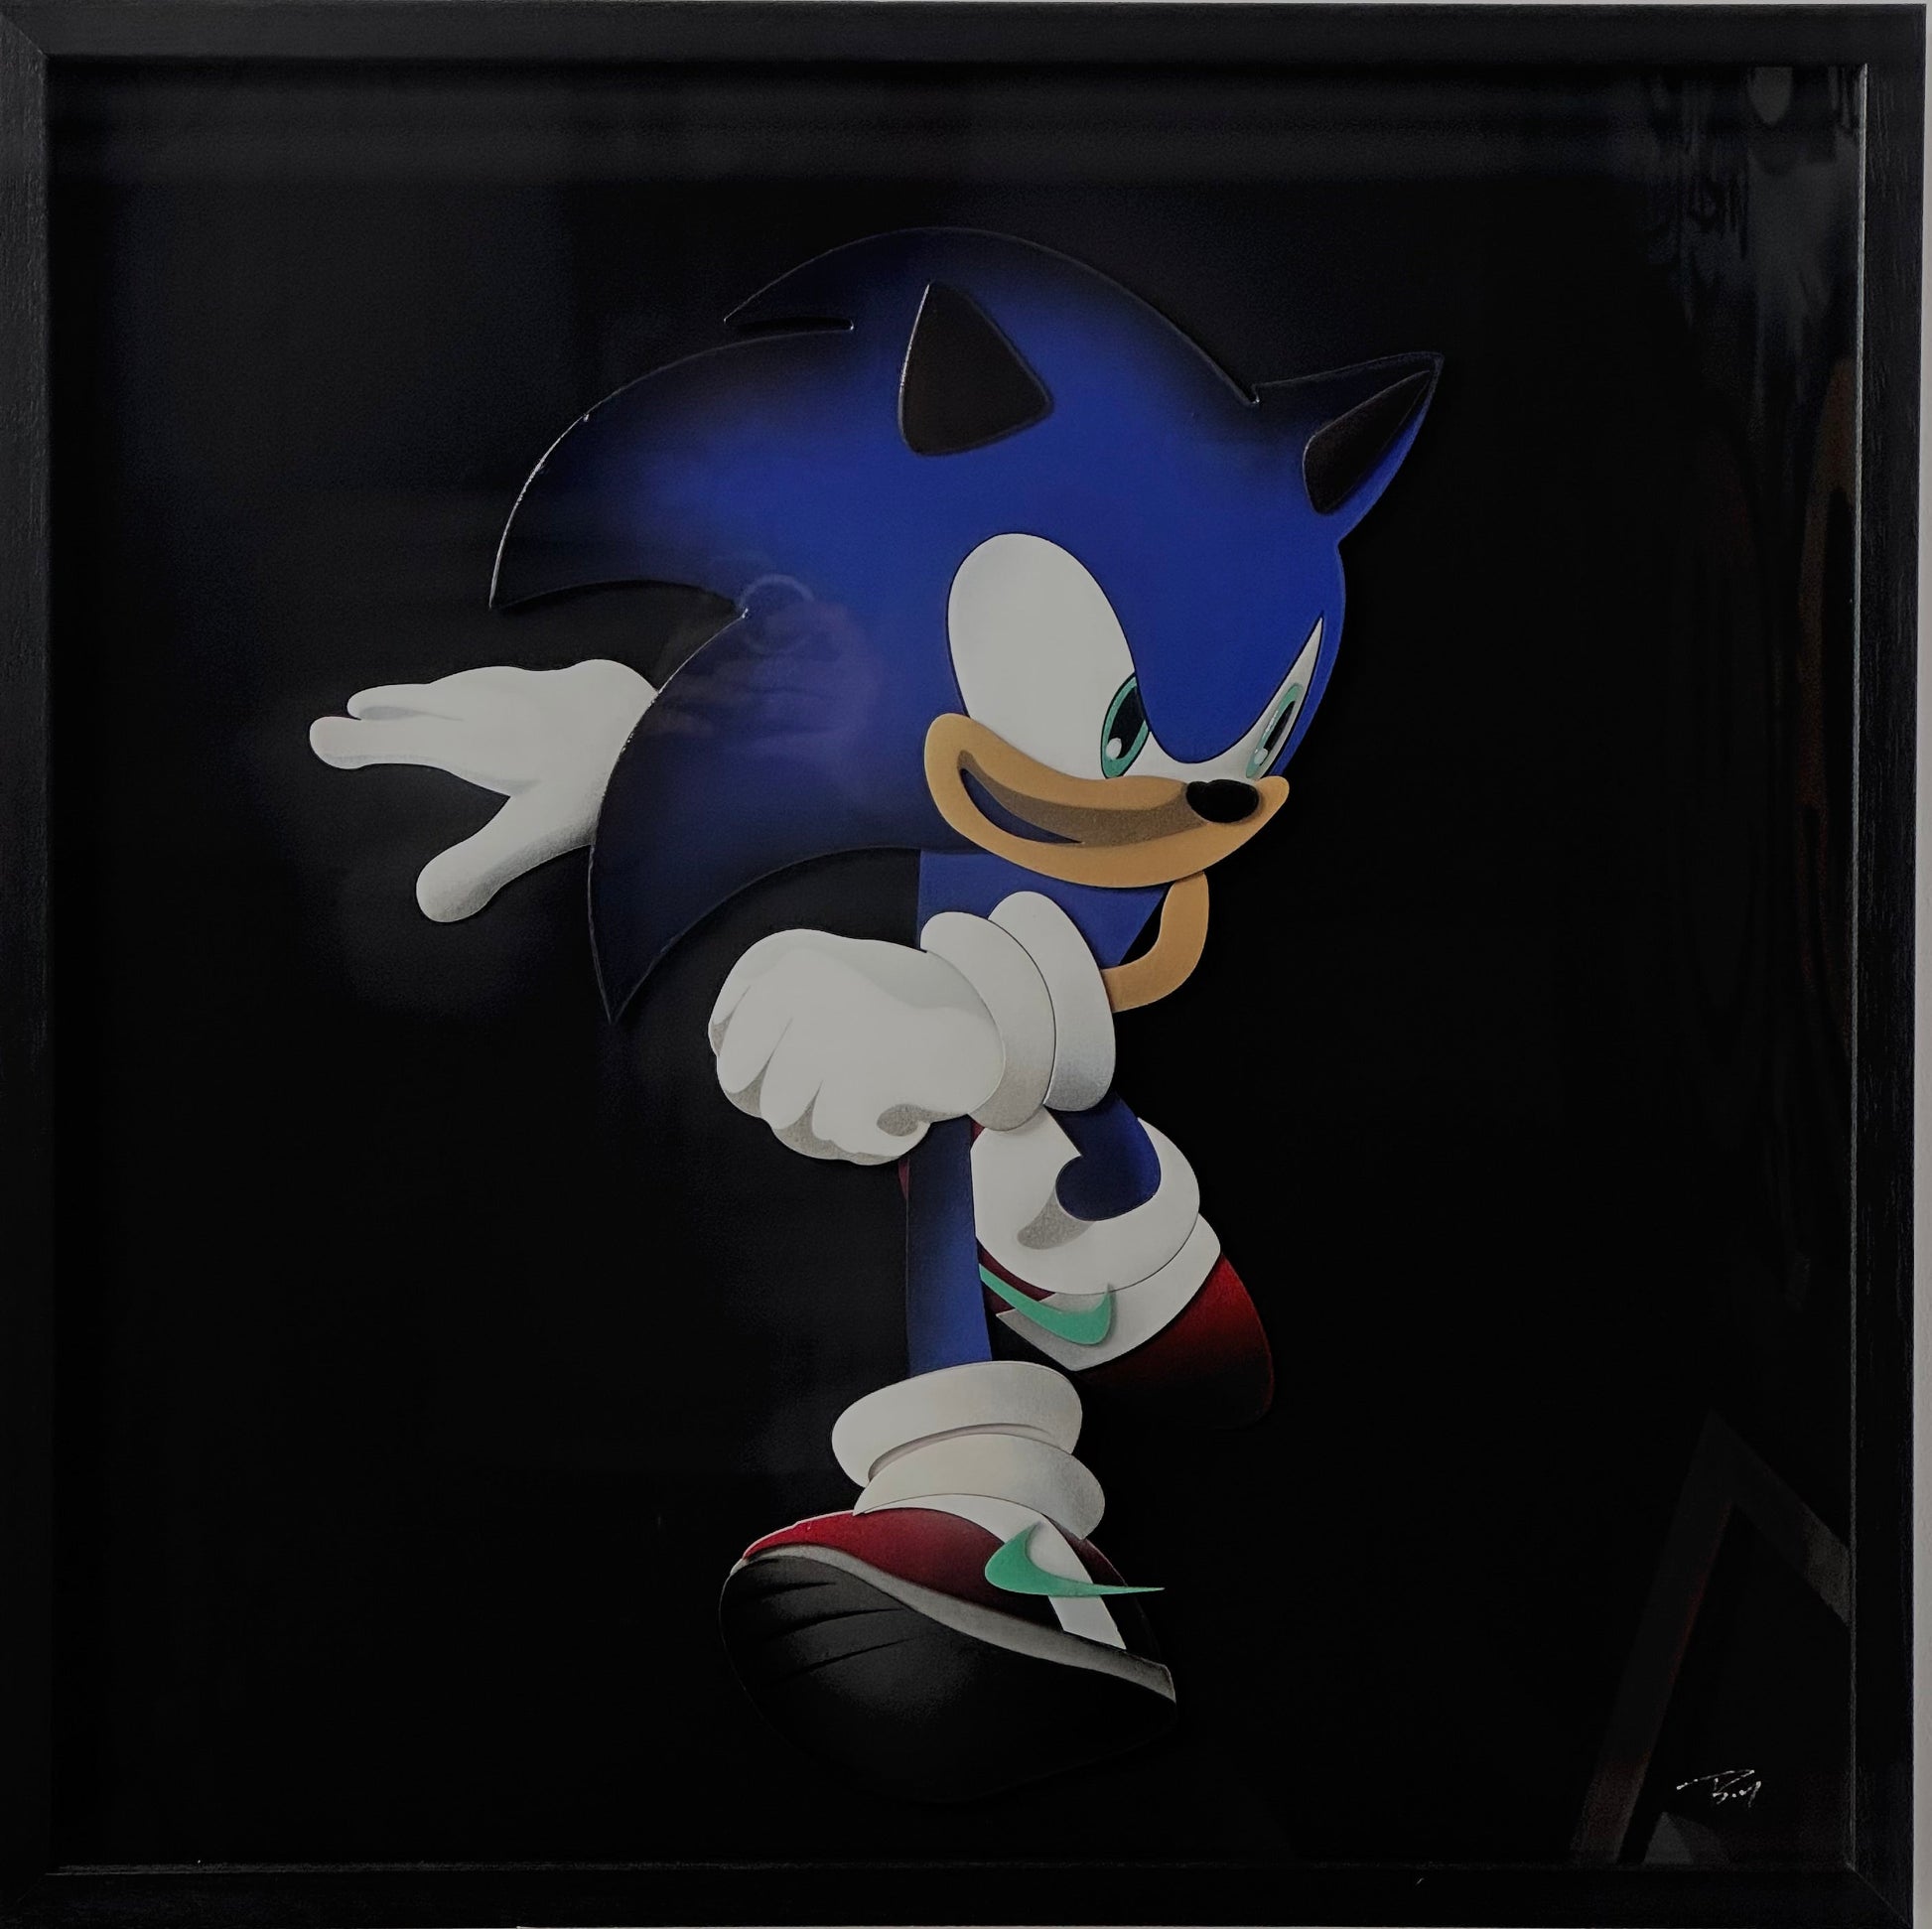 Sonic swoosh deepest black edition - Smolensky Gallery